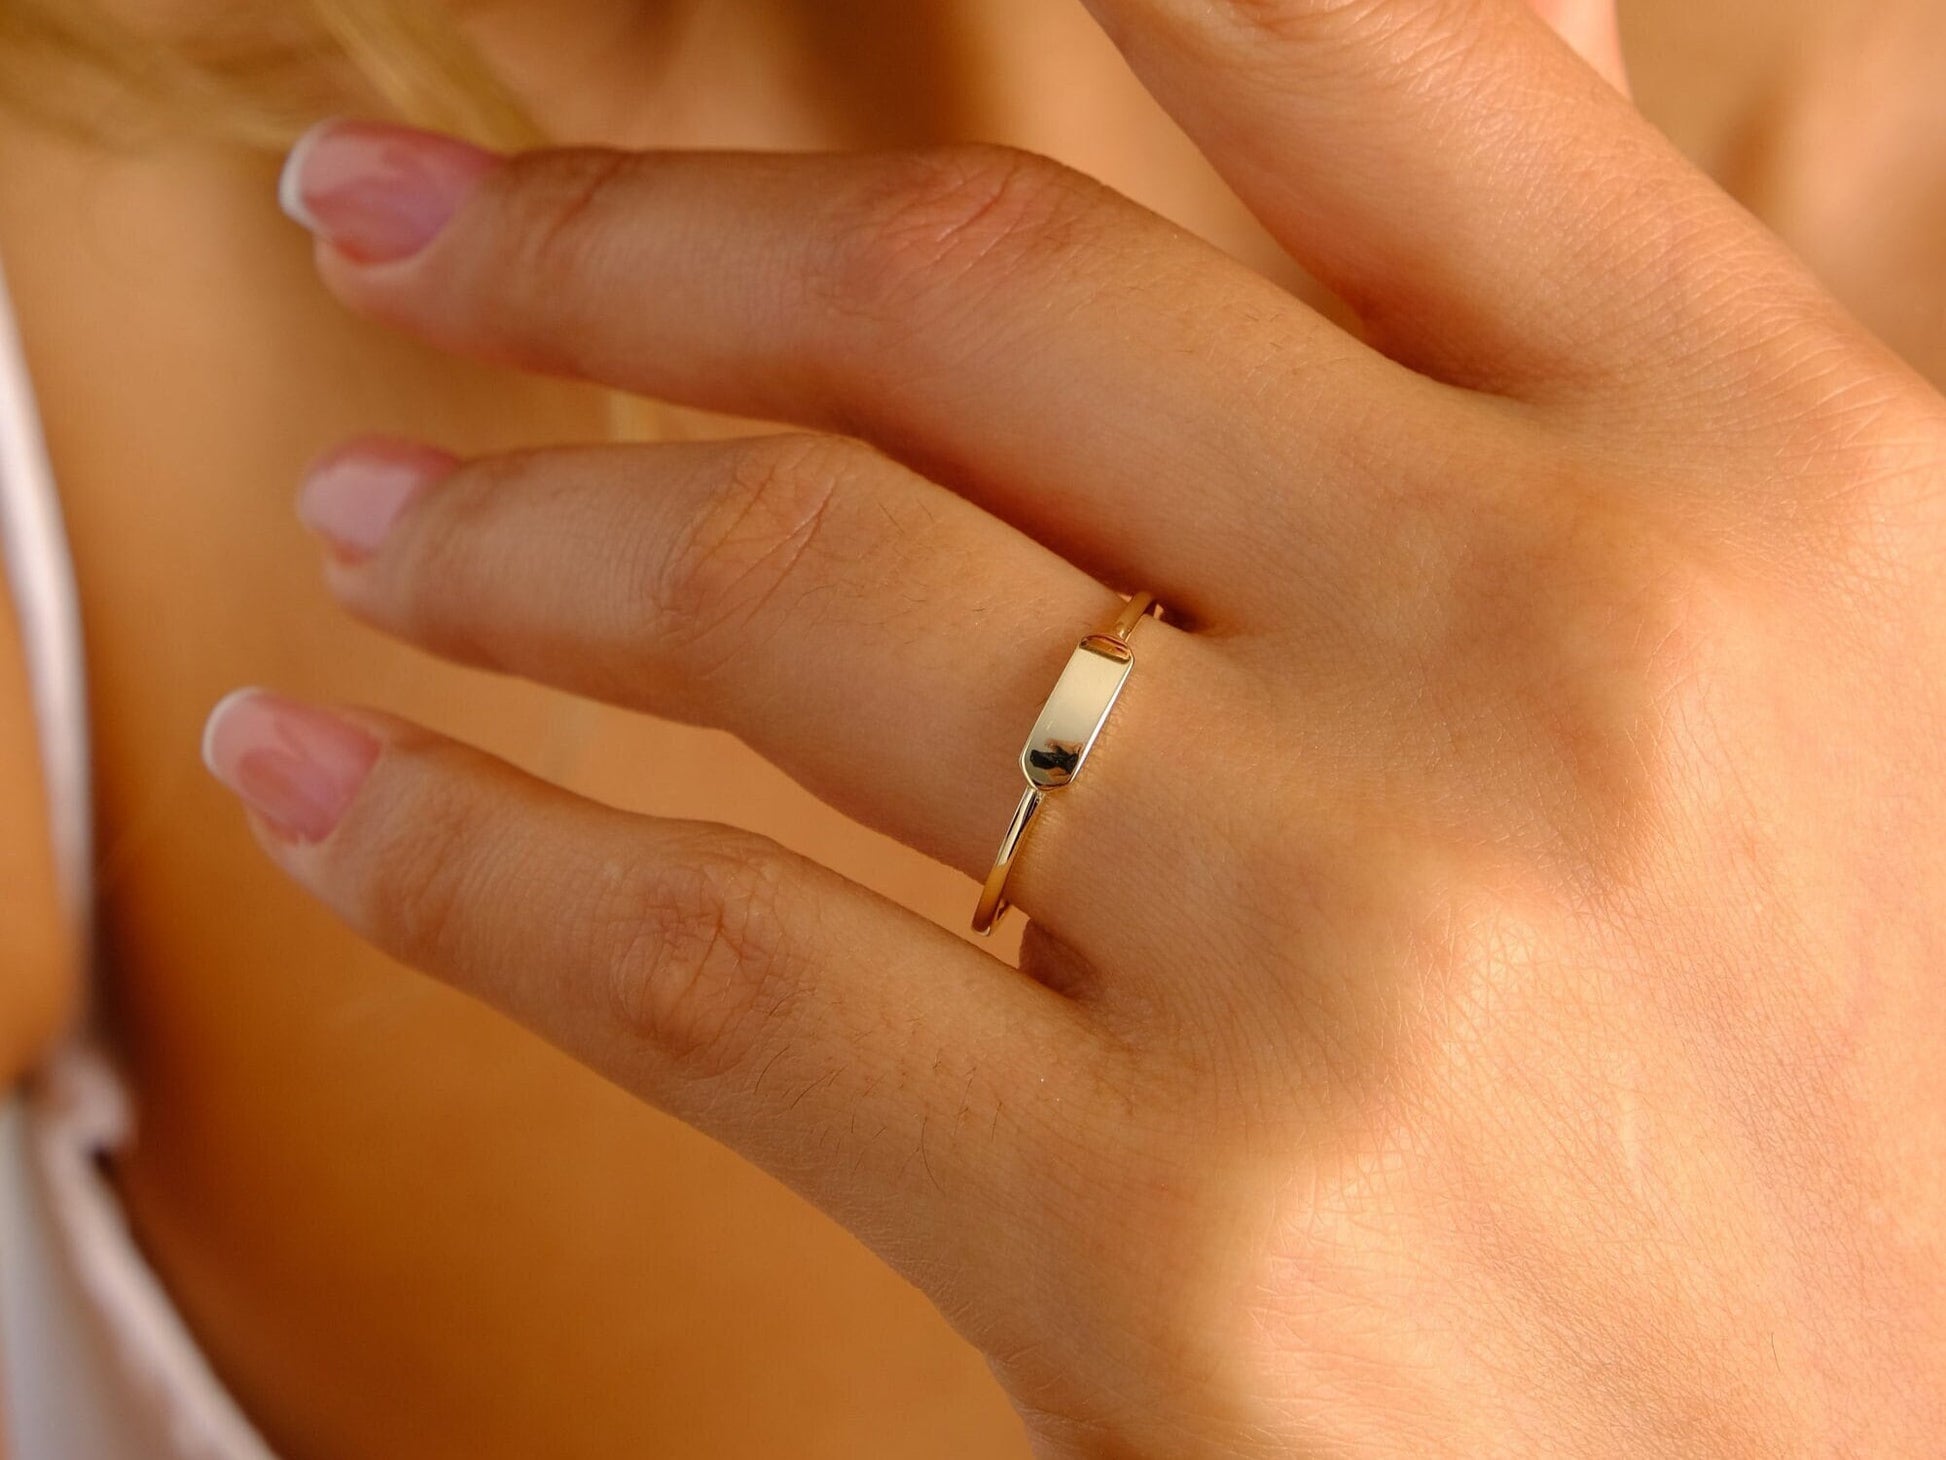 14k Gold Name Ring, Personalized Name Band Ring, Stackable Name Bar Ring, Custom Baby Name Ring, Cursive Engraved Gold Ring, Dainty Bar Ring